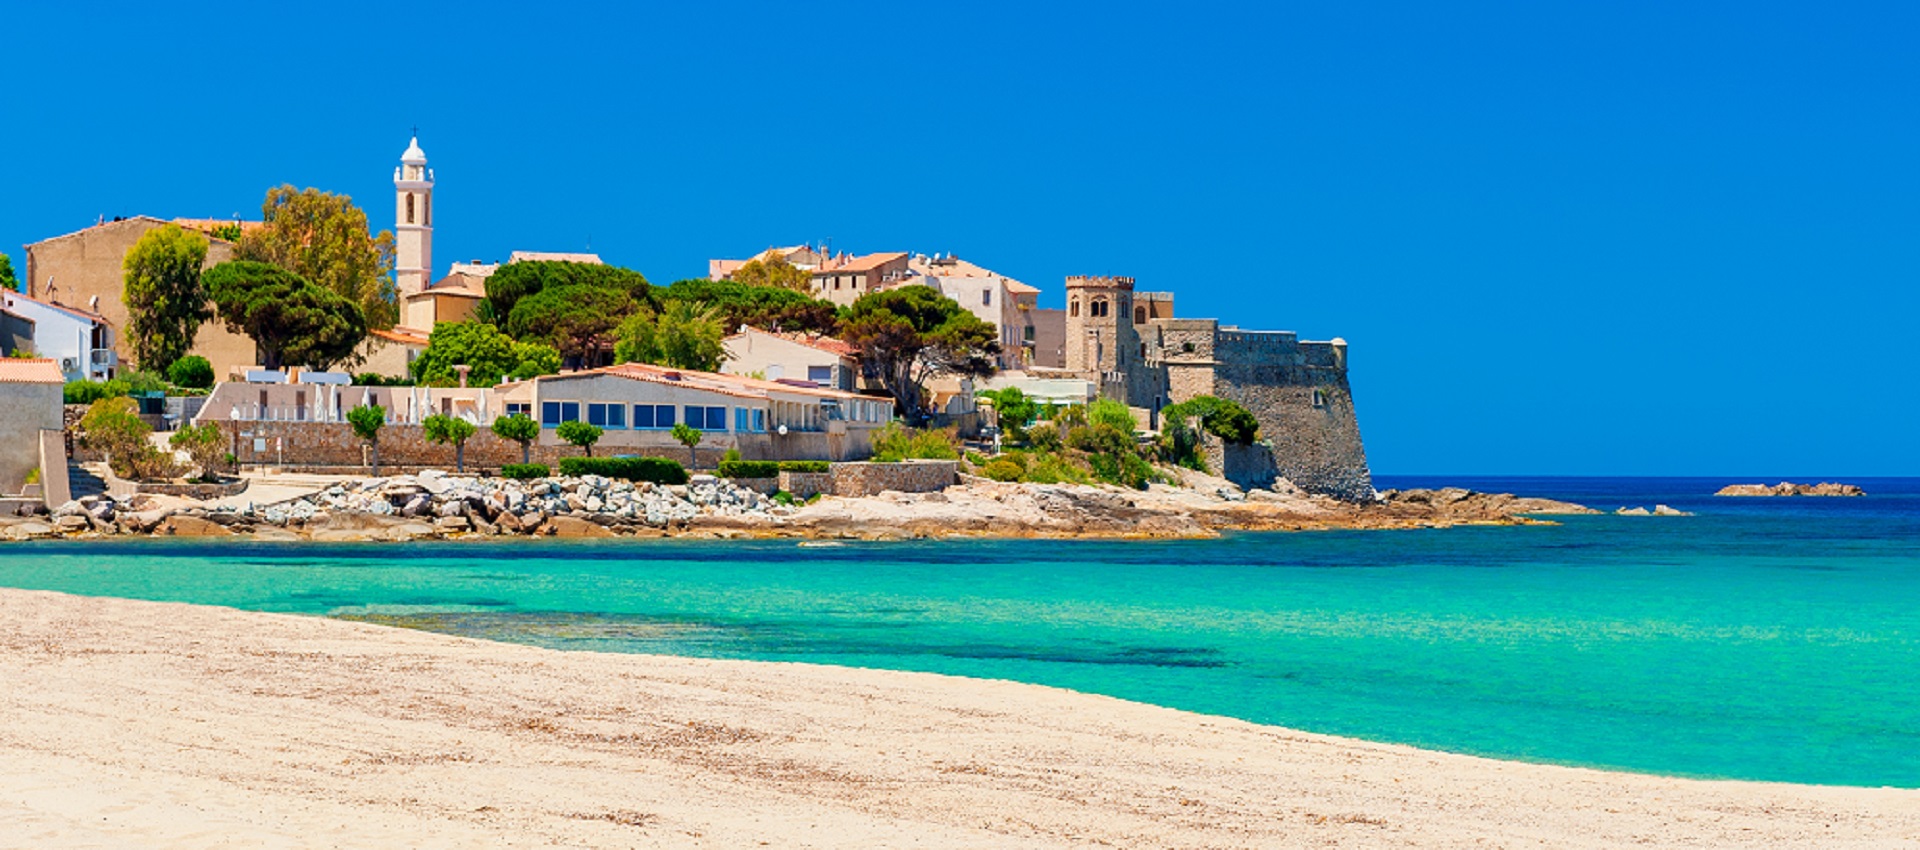 Beach,And,Coastline,Of,Algajola,Corsica,France